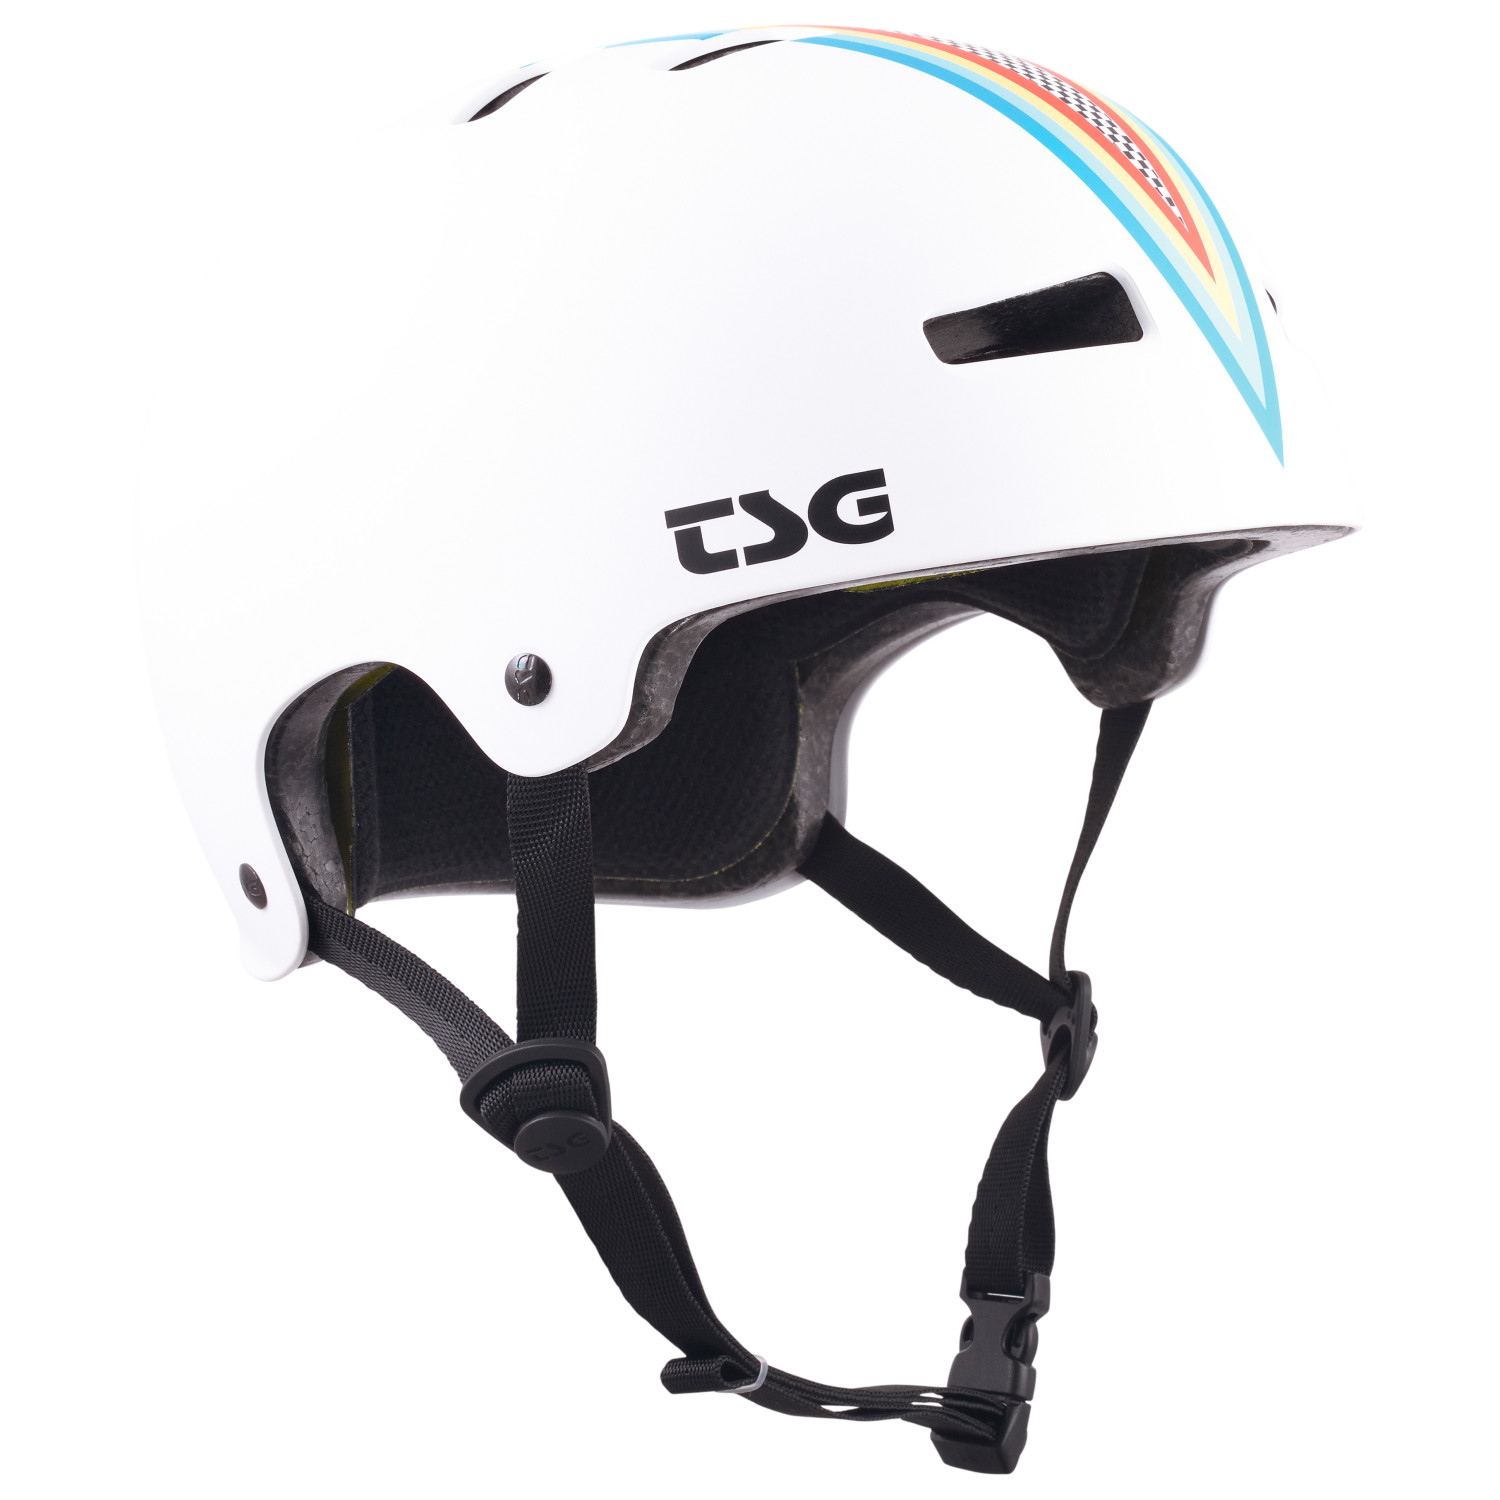 Велосипедный шлем Tsg Evolution Graphic Design, цвет Pintail шлем велосипедный stern зеленый размер 52 56